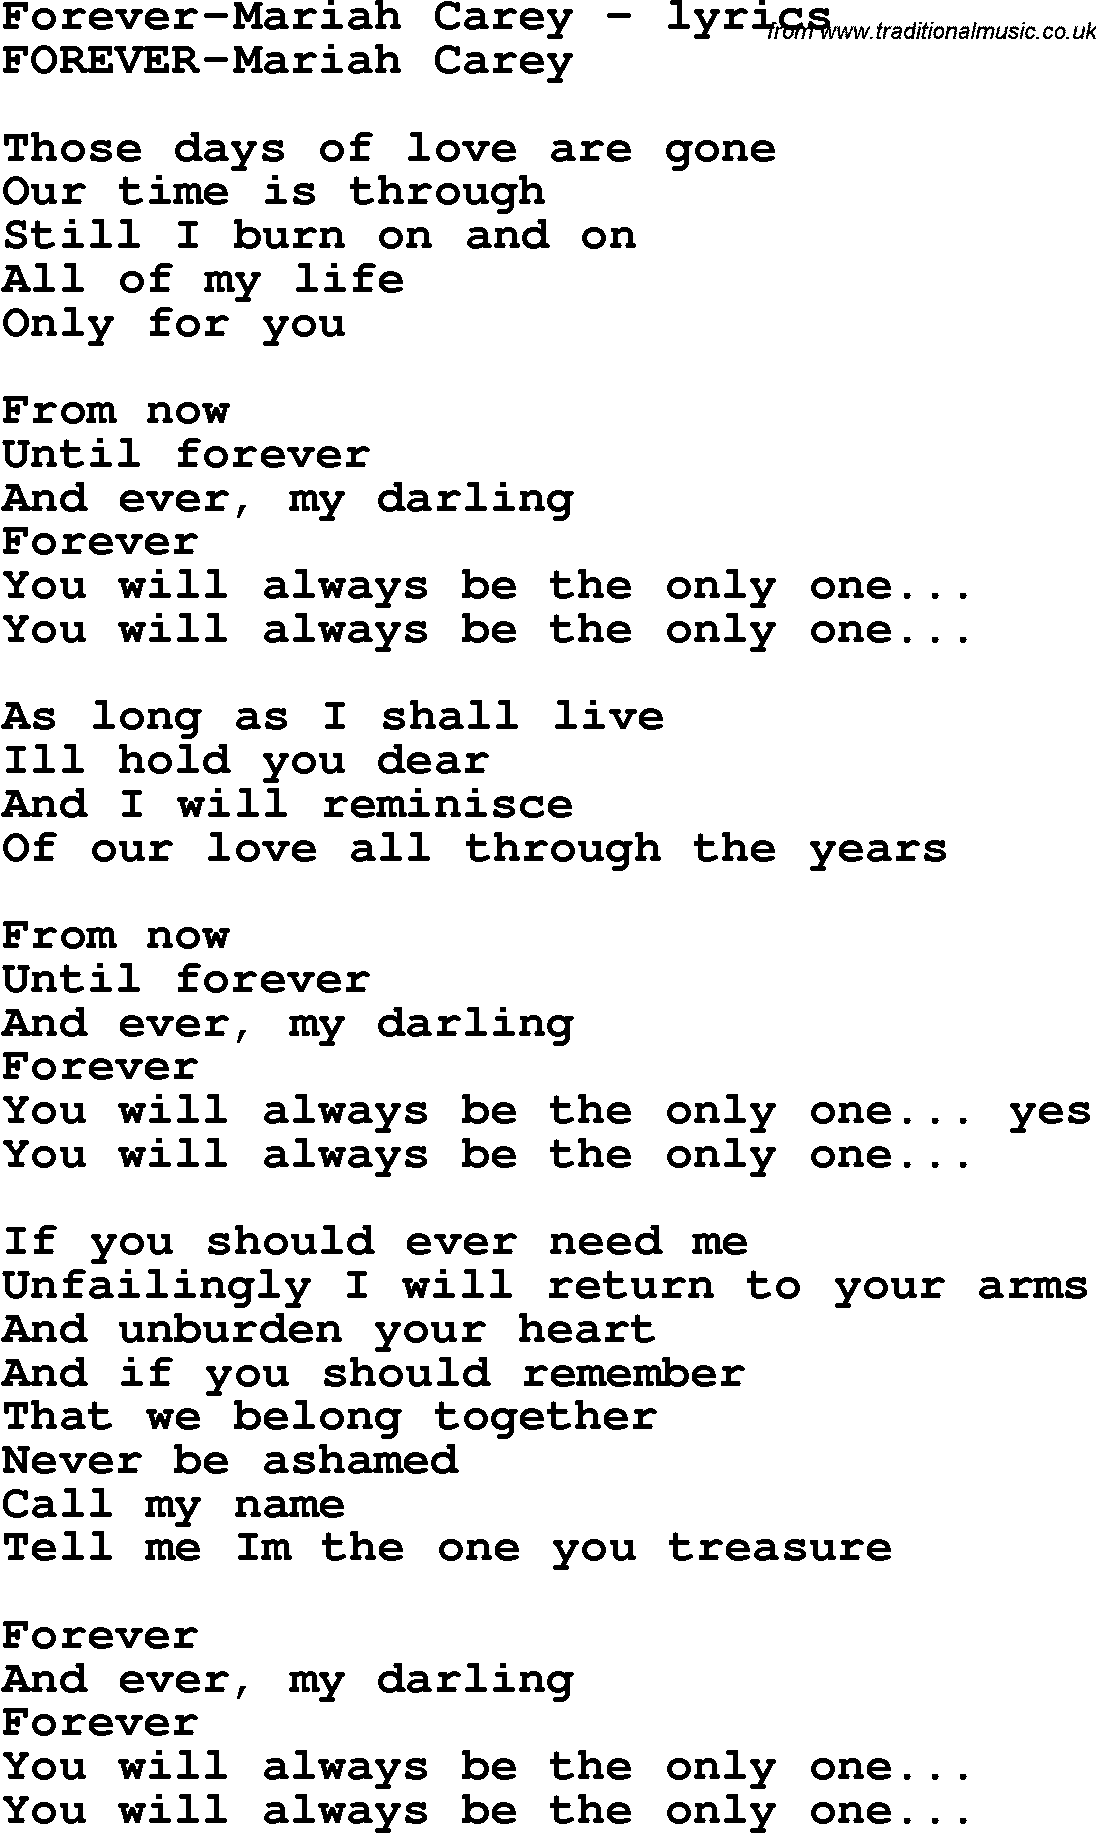 Love Song Lyrics for: Forever-Mariah Carey